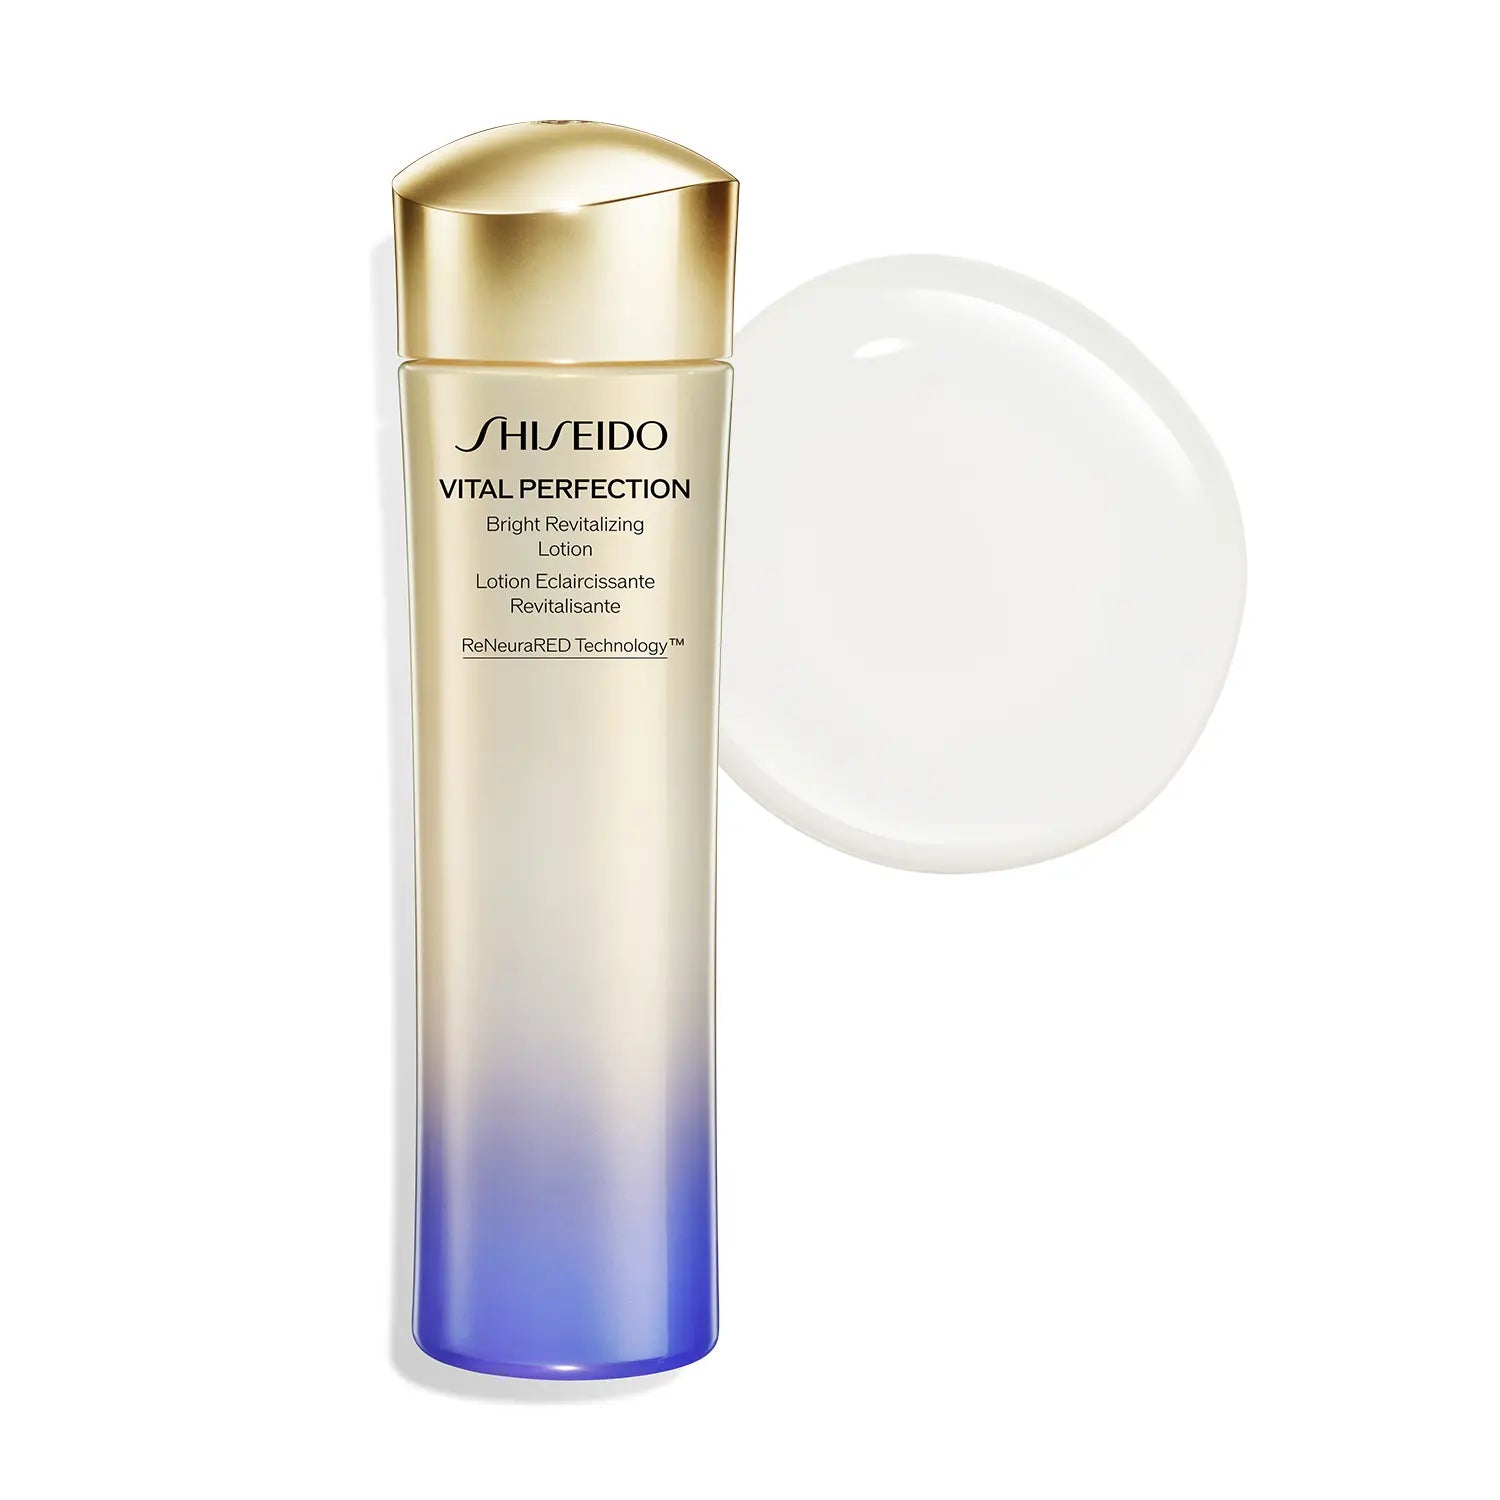 Shiseido Vital Perfection Bright Revital Lotion